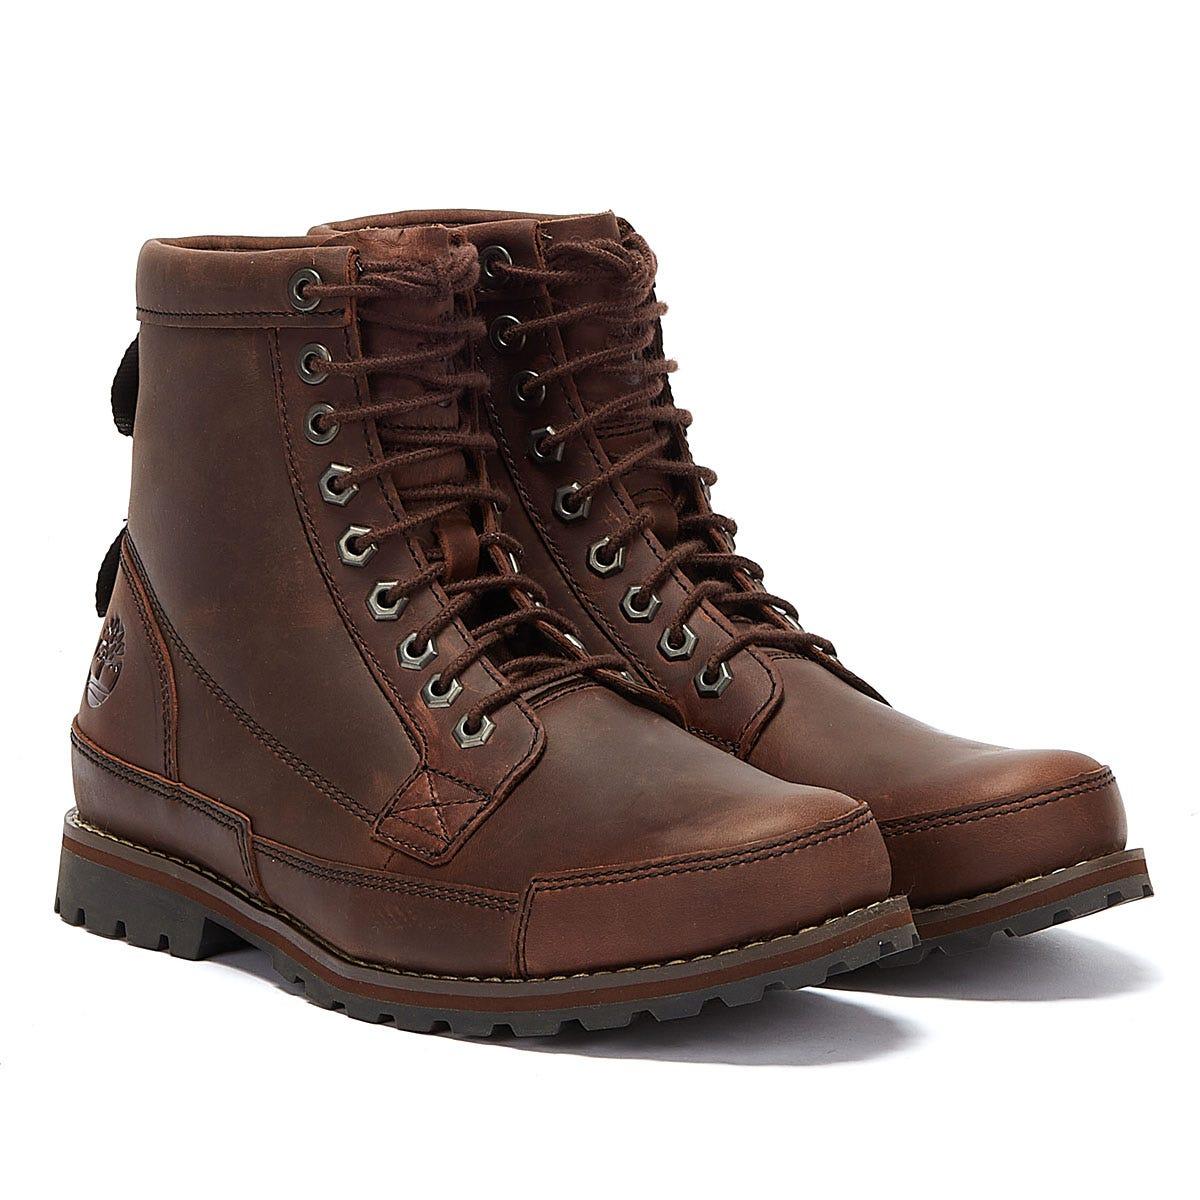 Timberland Leather Originals Ii 6 Inch Dark Boots in Brown for Men - Lyst